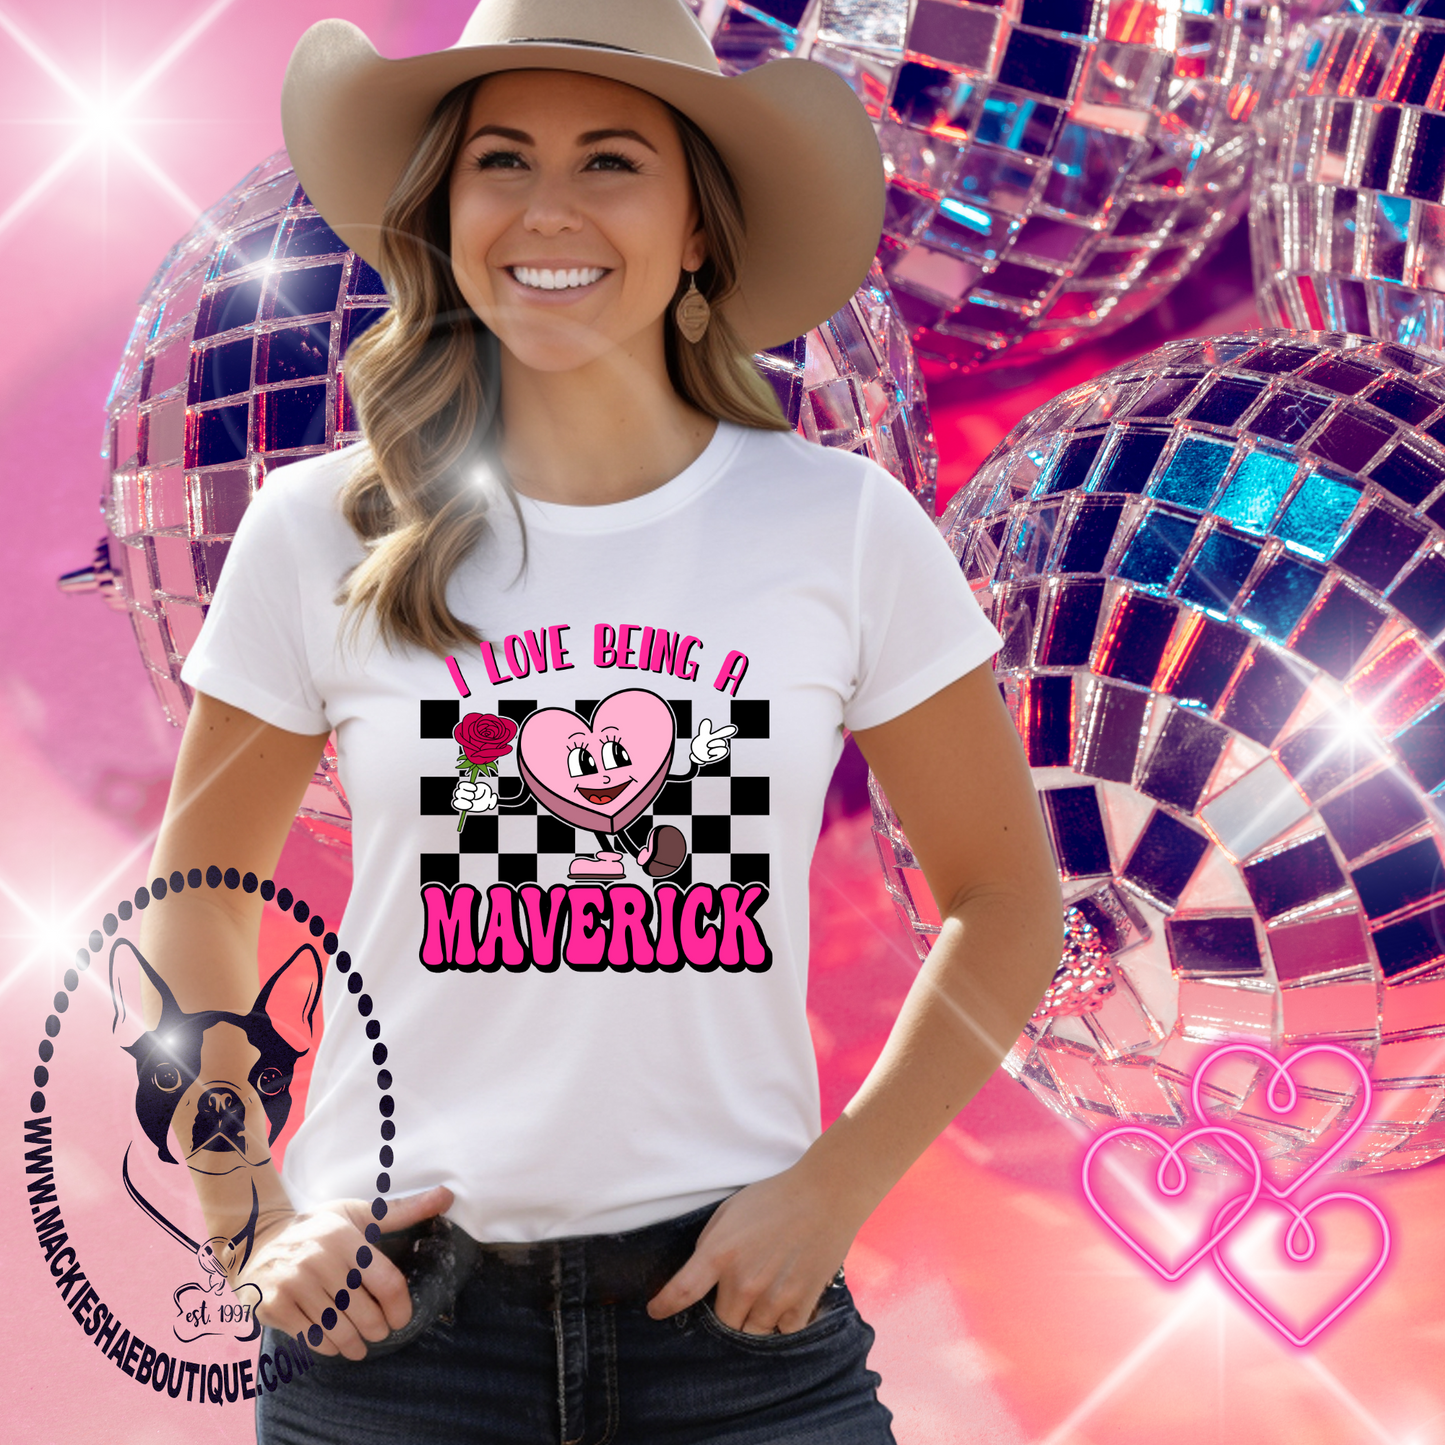 I Love Being A Maverick Custom Shirt for Kids and Adults, Soft Tees and Crewneck Sweatshirts